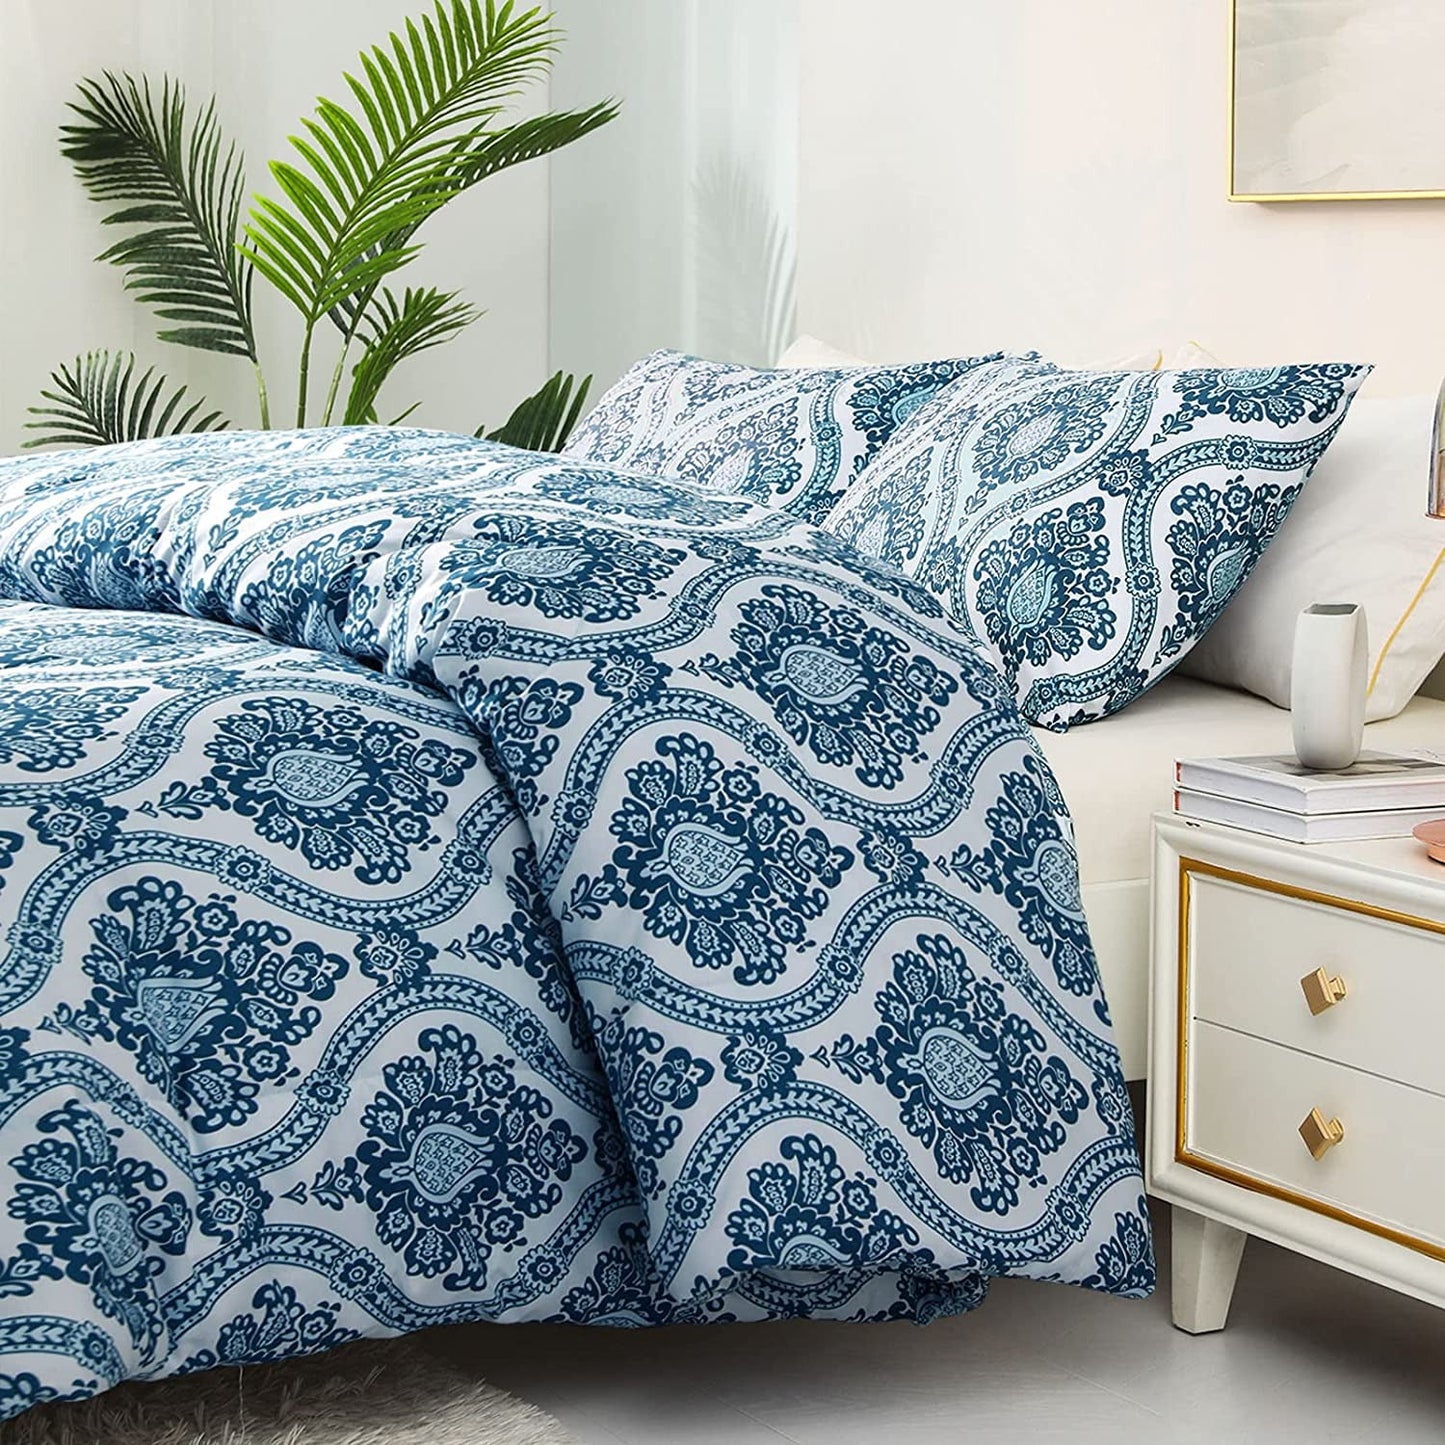 Exclusivo Mezcla 2-Piece Boho Damask Twin Comforter Set, Microfiber Bedding Down Alternative Comforter for All Seasons with 1 Pillow Sham, Navy Blue